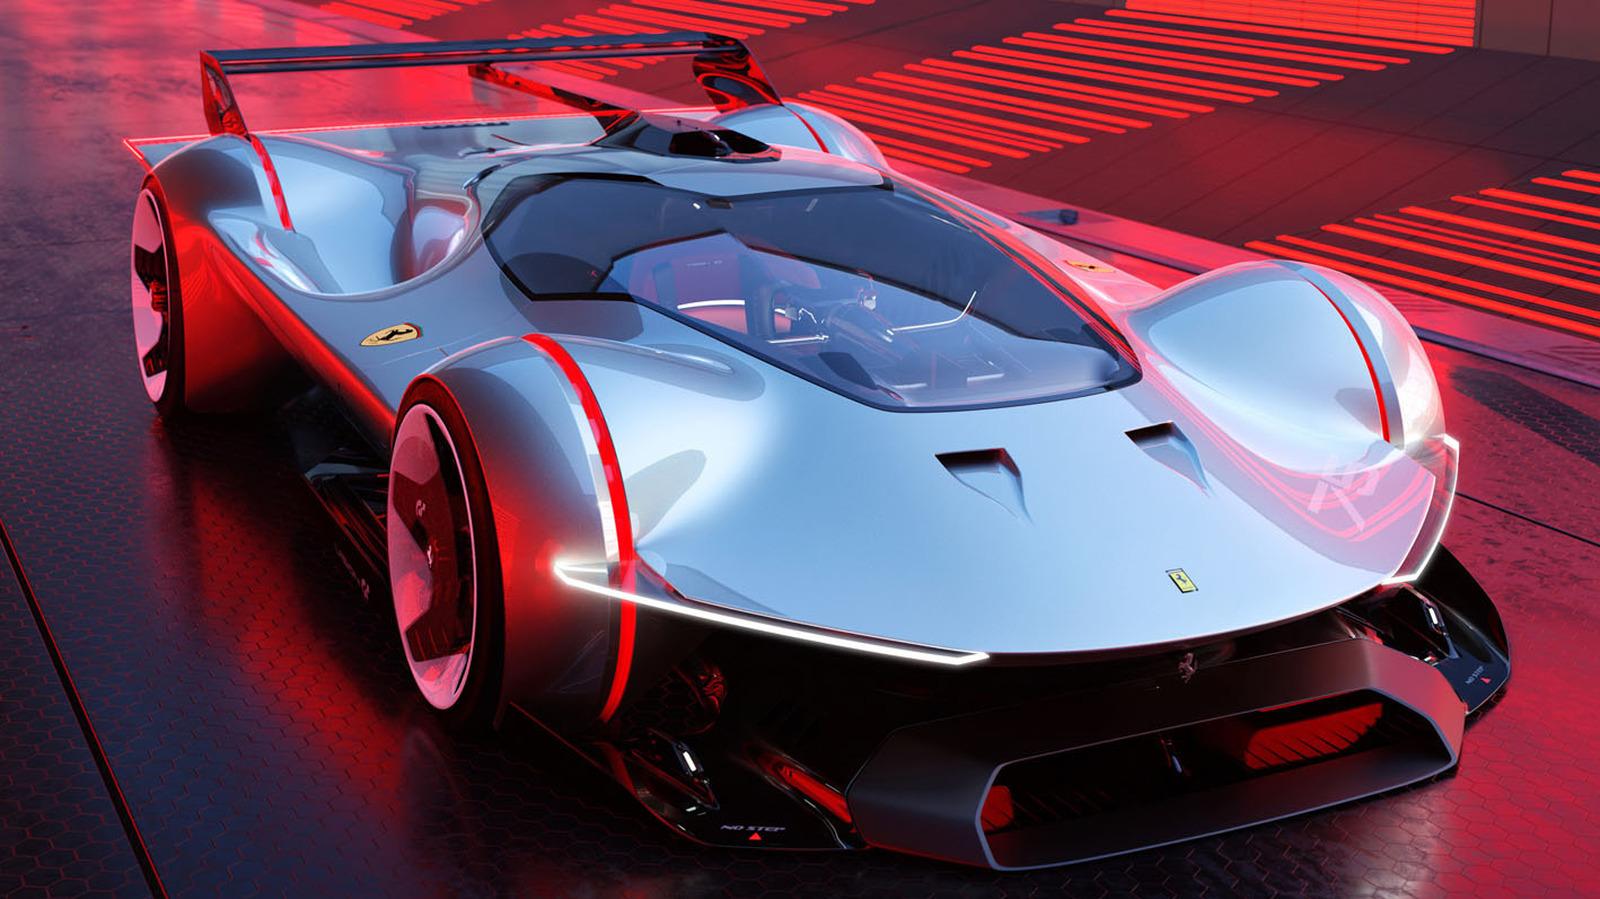  Coolest Ferrari Concept Cars Ever Made